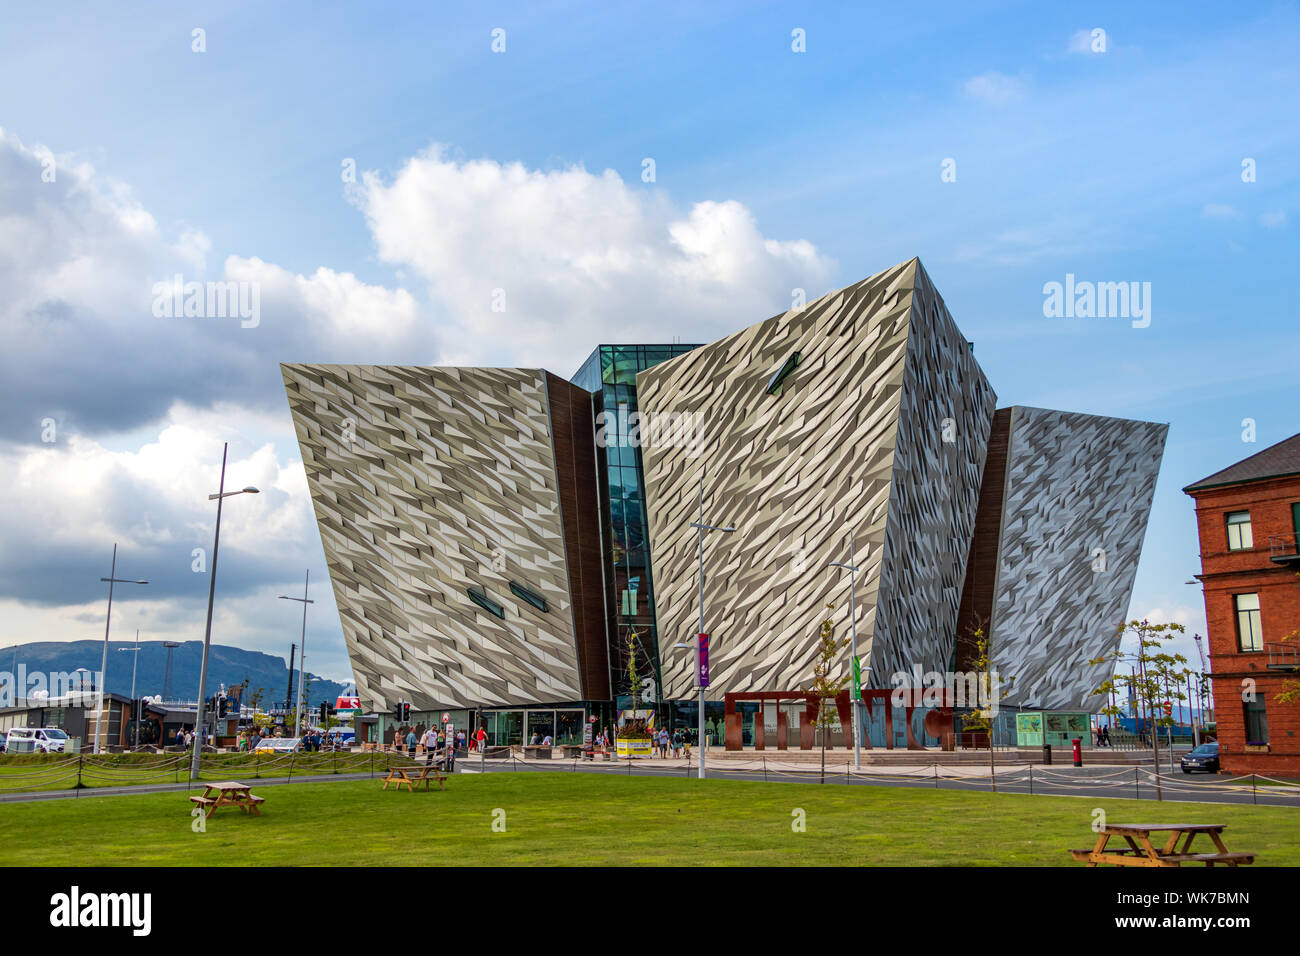 Belfast, Northern Ireland, UK - August 1th, 2019: The Titanic museum in Belfast, Northern Ireland, UK. Stock Photo